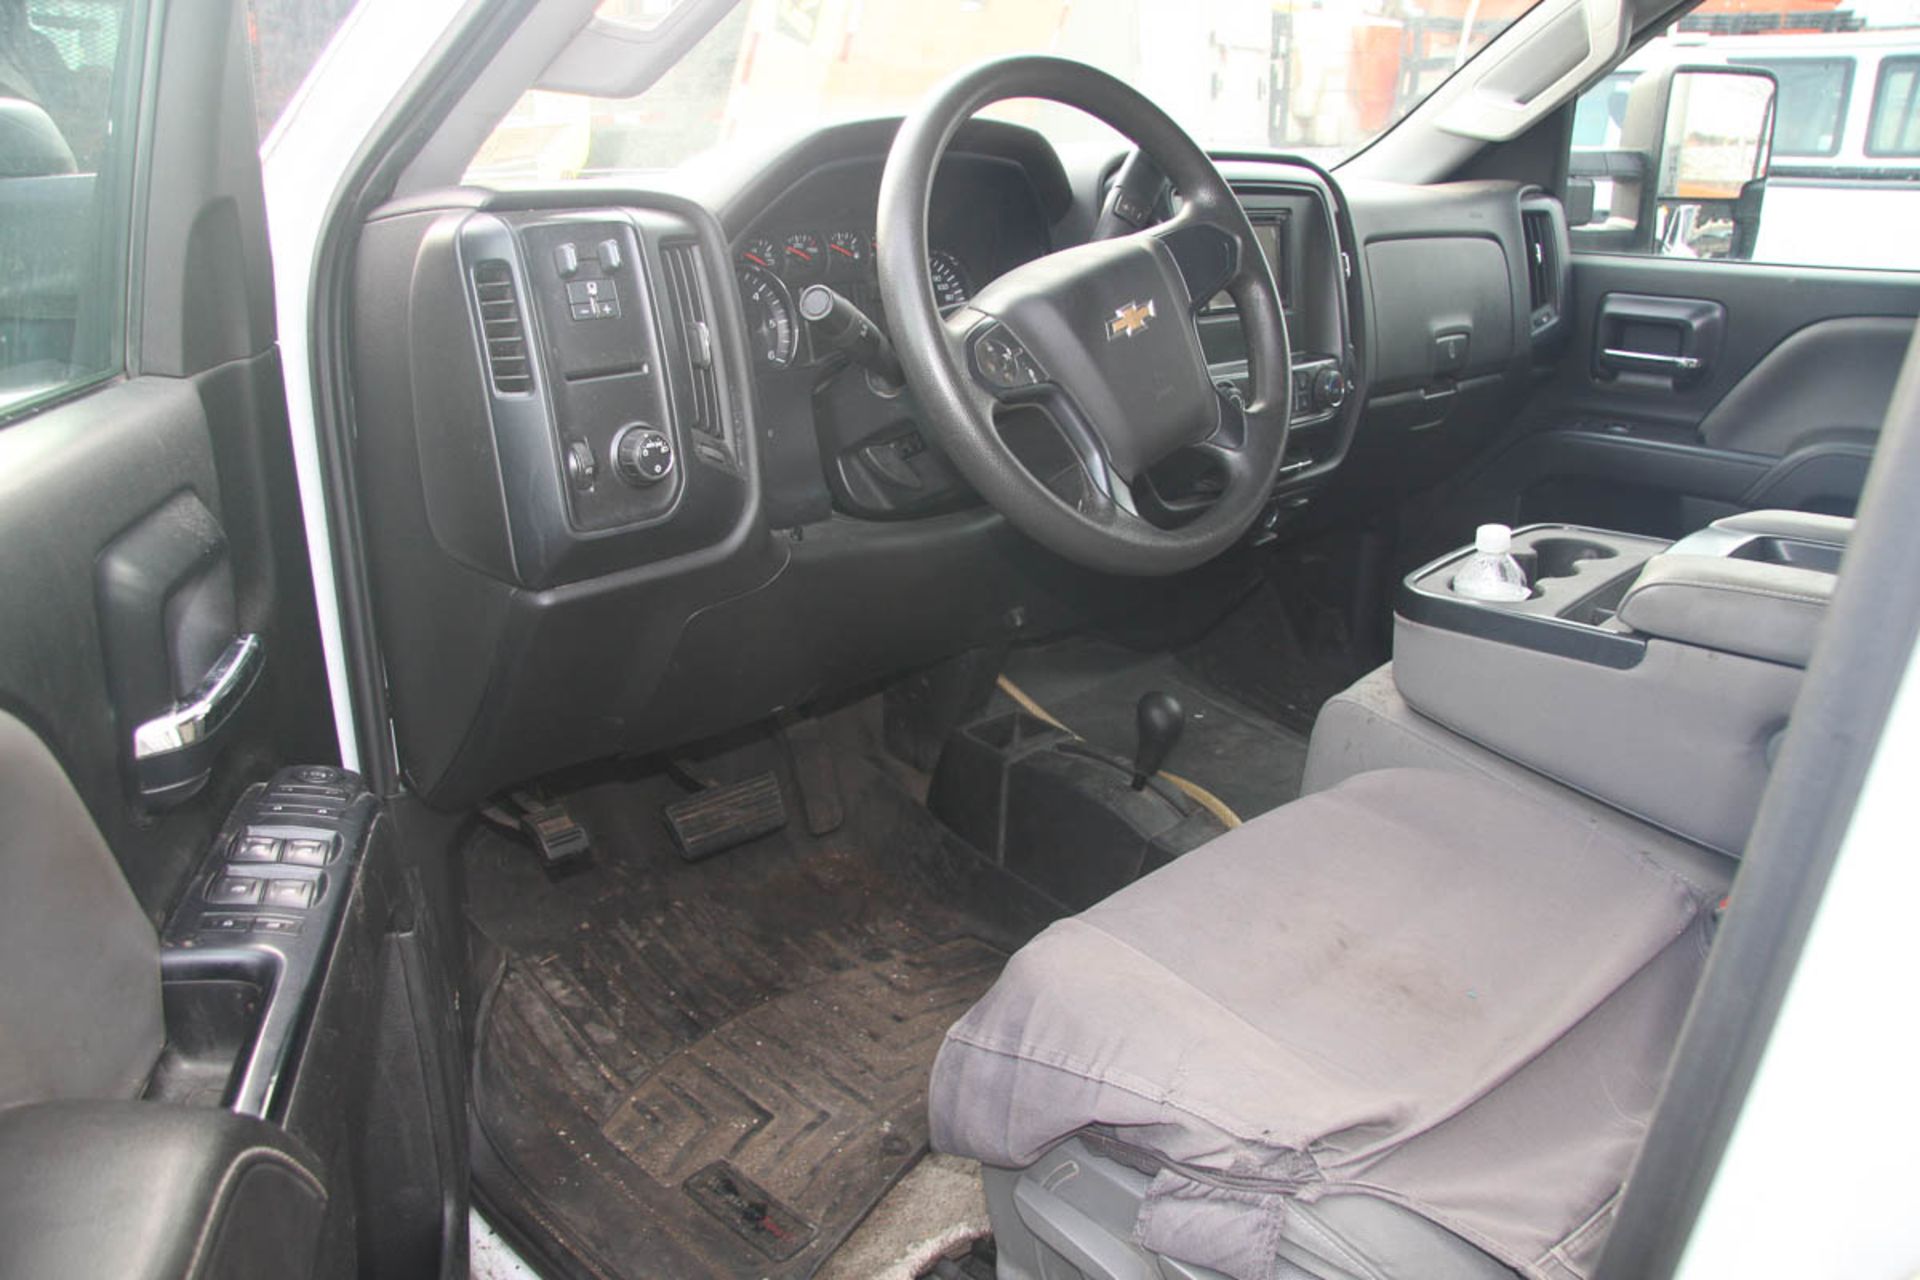 2015 CHEVY 2500HD SILVERADO PICKUP TRUCK, CREW CAB, 4-WHEEL DRIVE, AUTOMATIC, POWER WINDOWS & DOORS, - Image 4 of 11